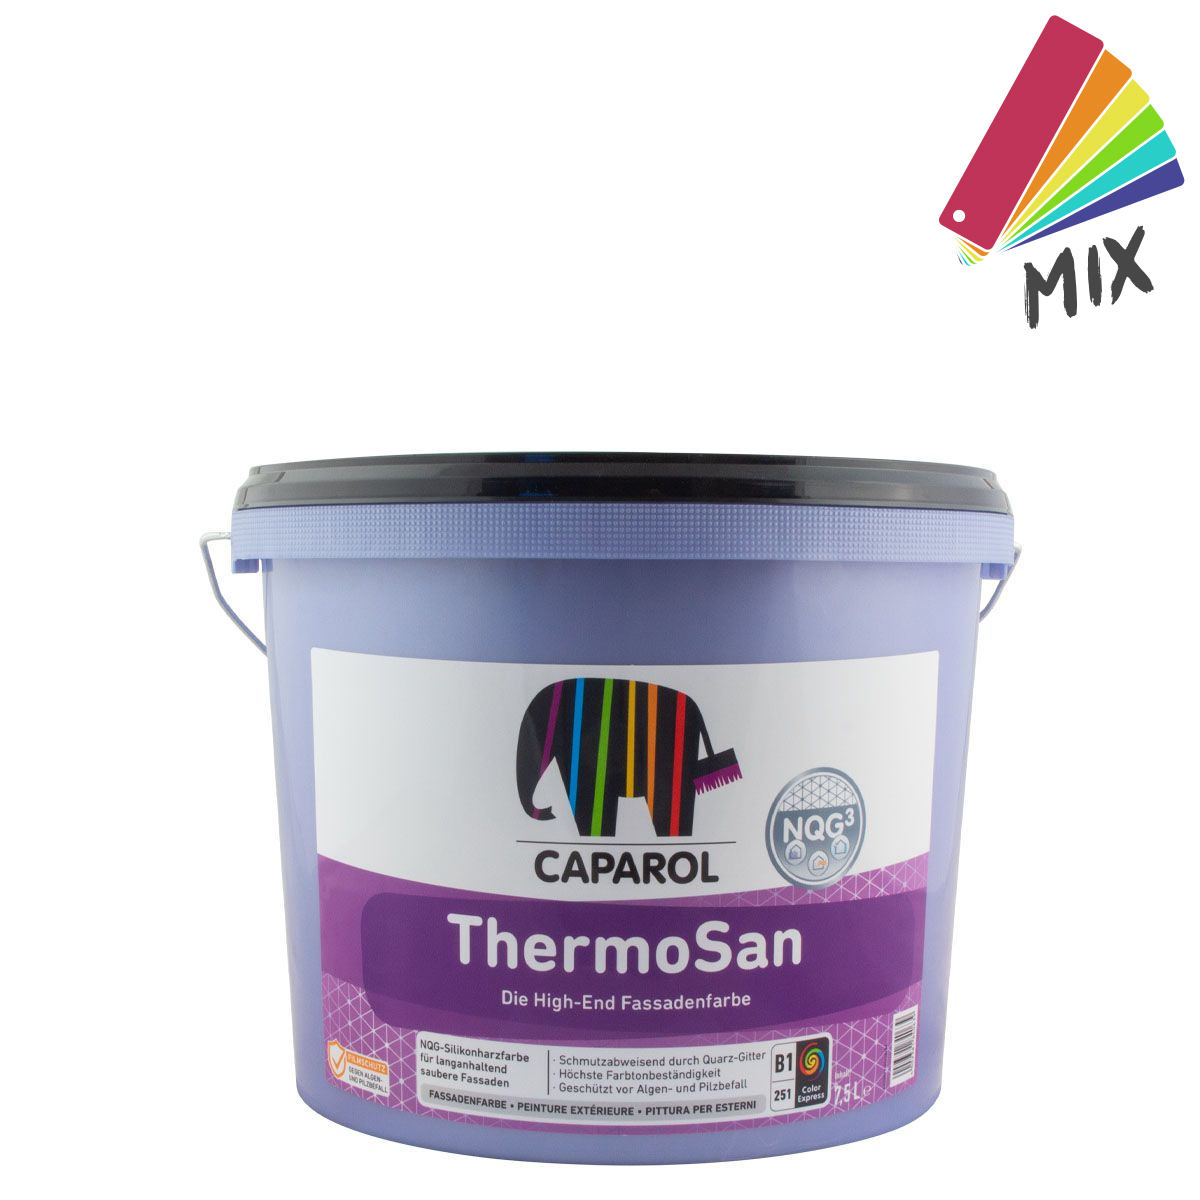 Caparol ThermoSan NQG 7,5L, MIX PG A Fassadenfarbe Nano-Quarz-Gitter